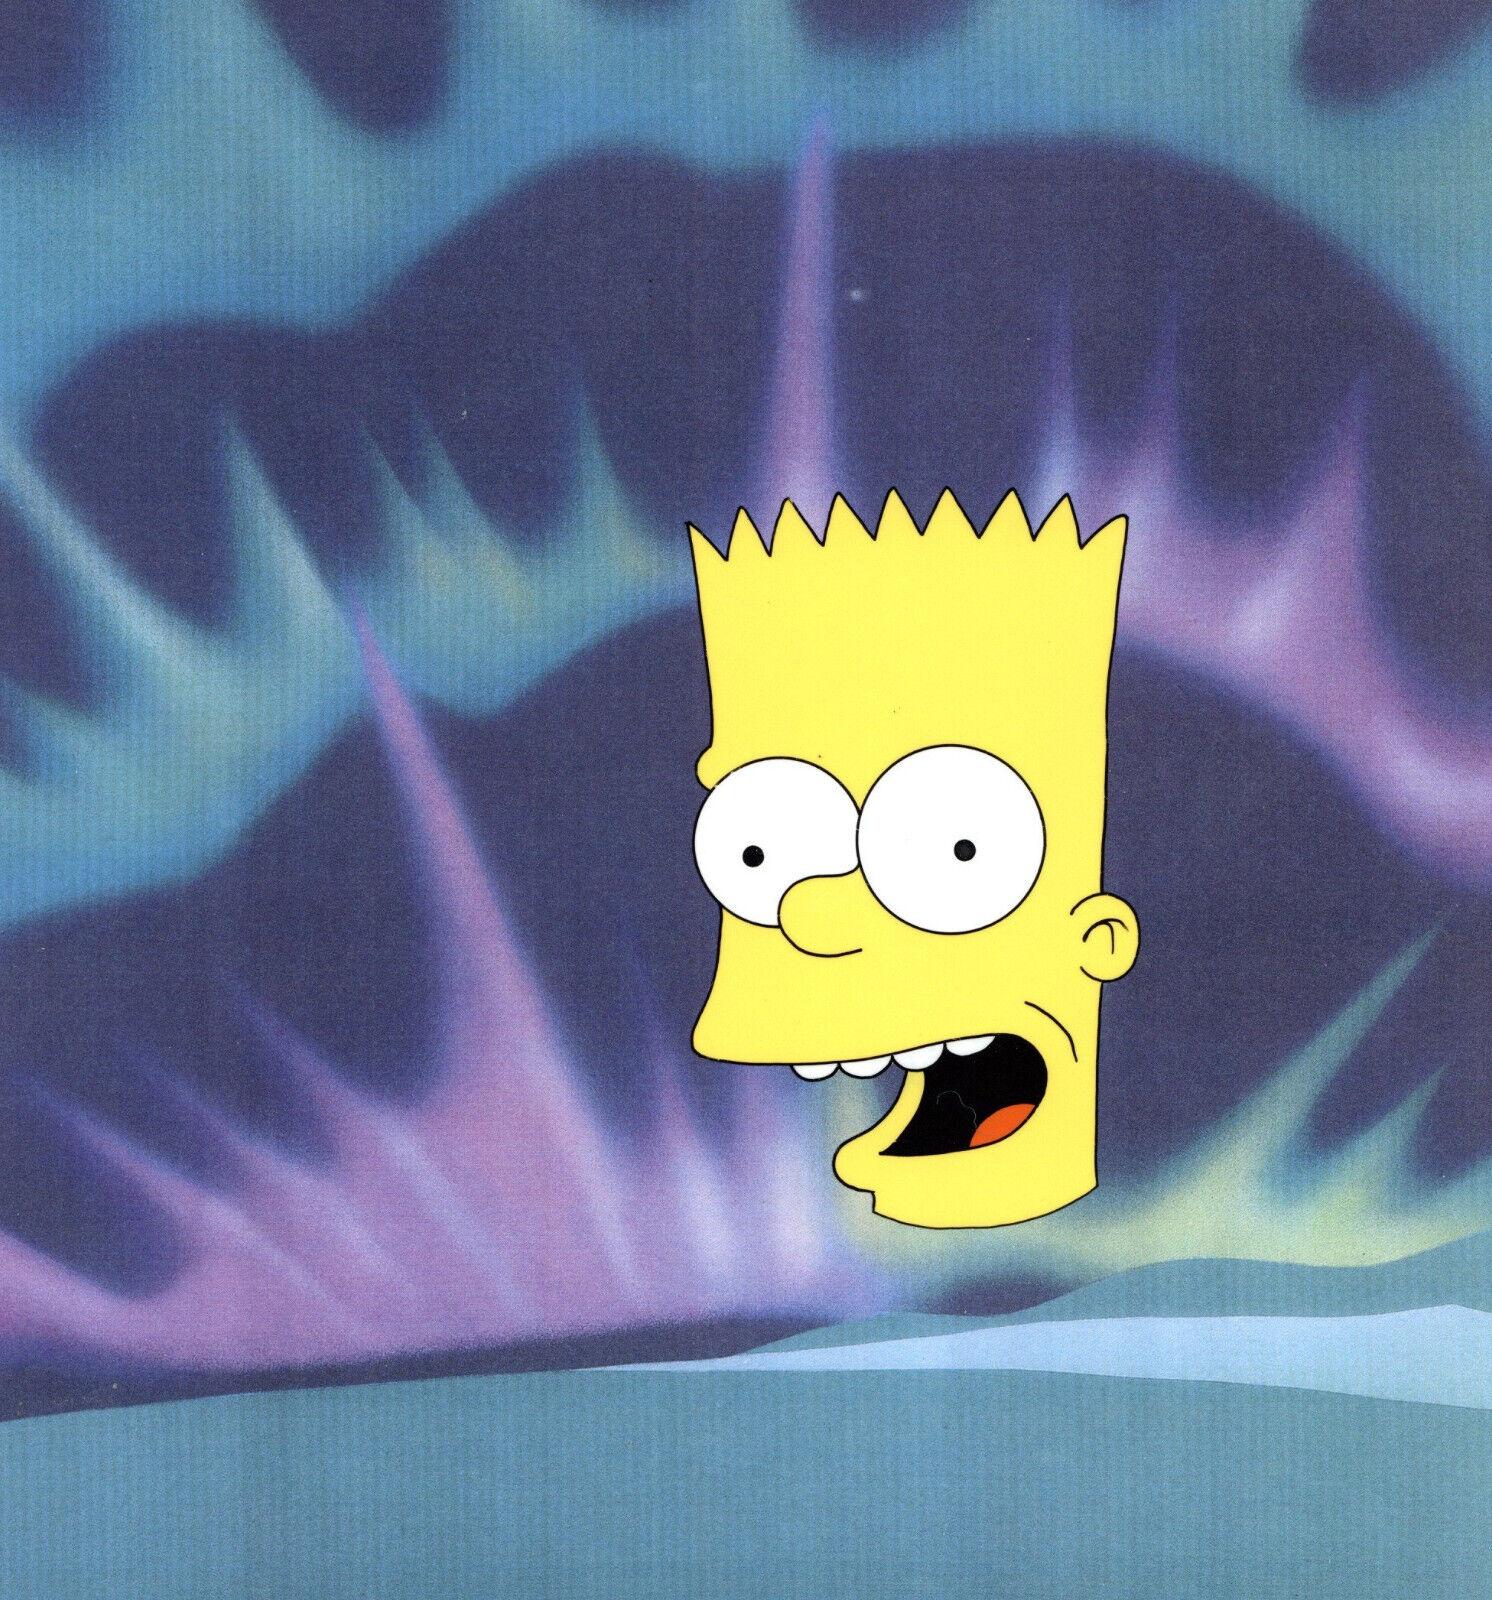 The Simpsons Original Production Cel: Bart Simpson - Art by Fox Studio Animation Artists